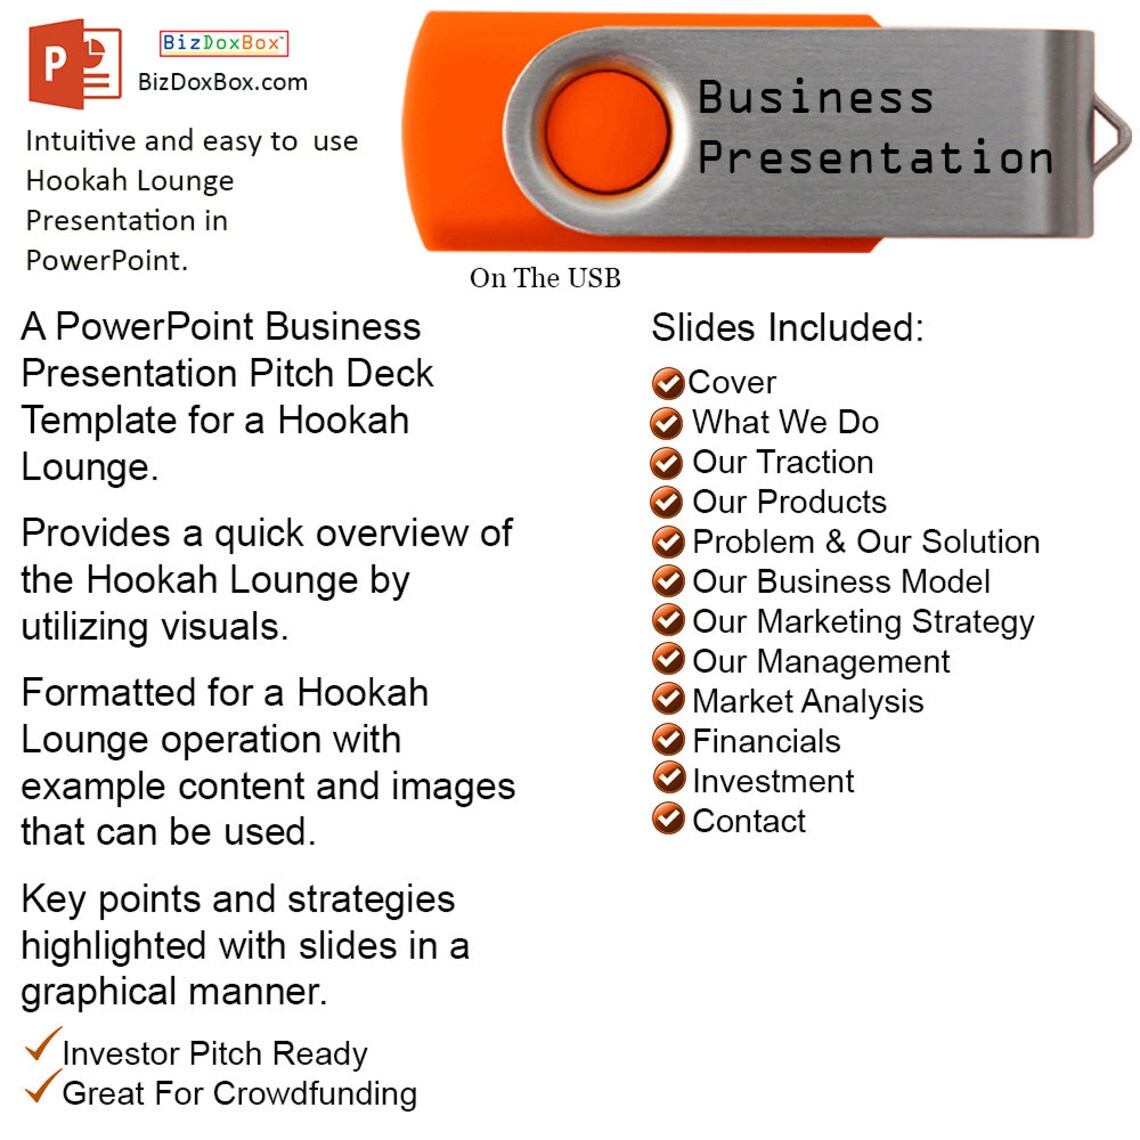 hookah lounge business plan template free